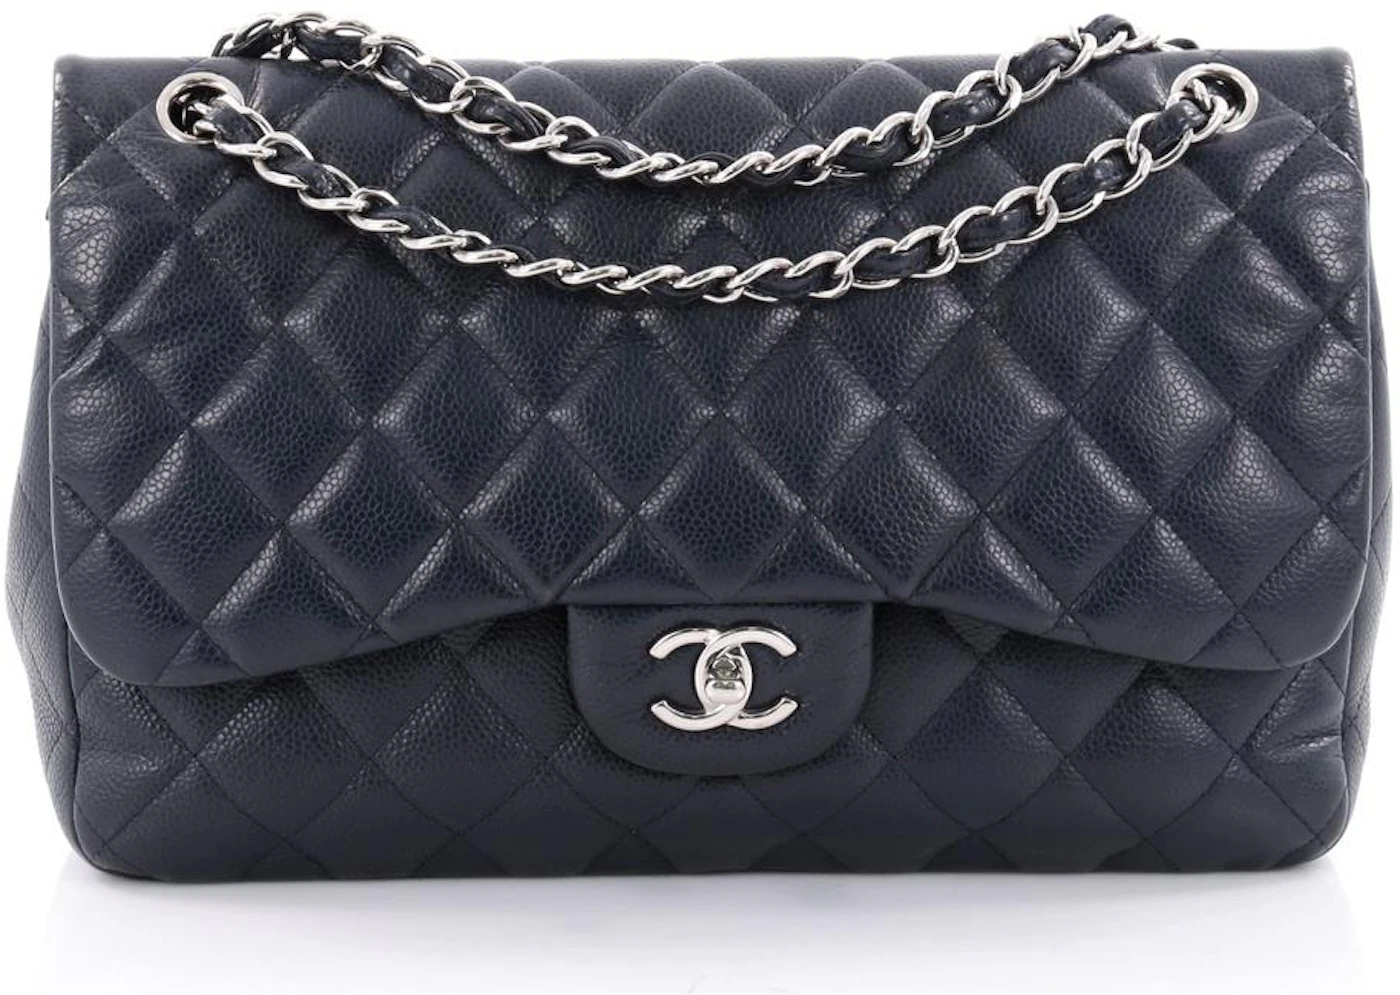 Chanel Black Glazed Calfskin Medium Boy Bag Ruthenium Hardware, 2015  Available For Immediate Sale At Sotheby's